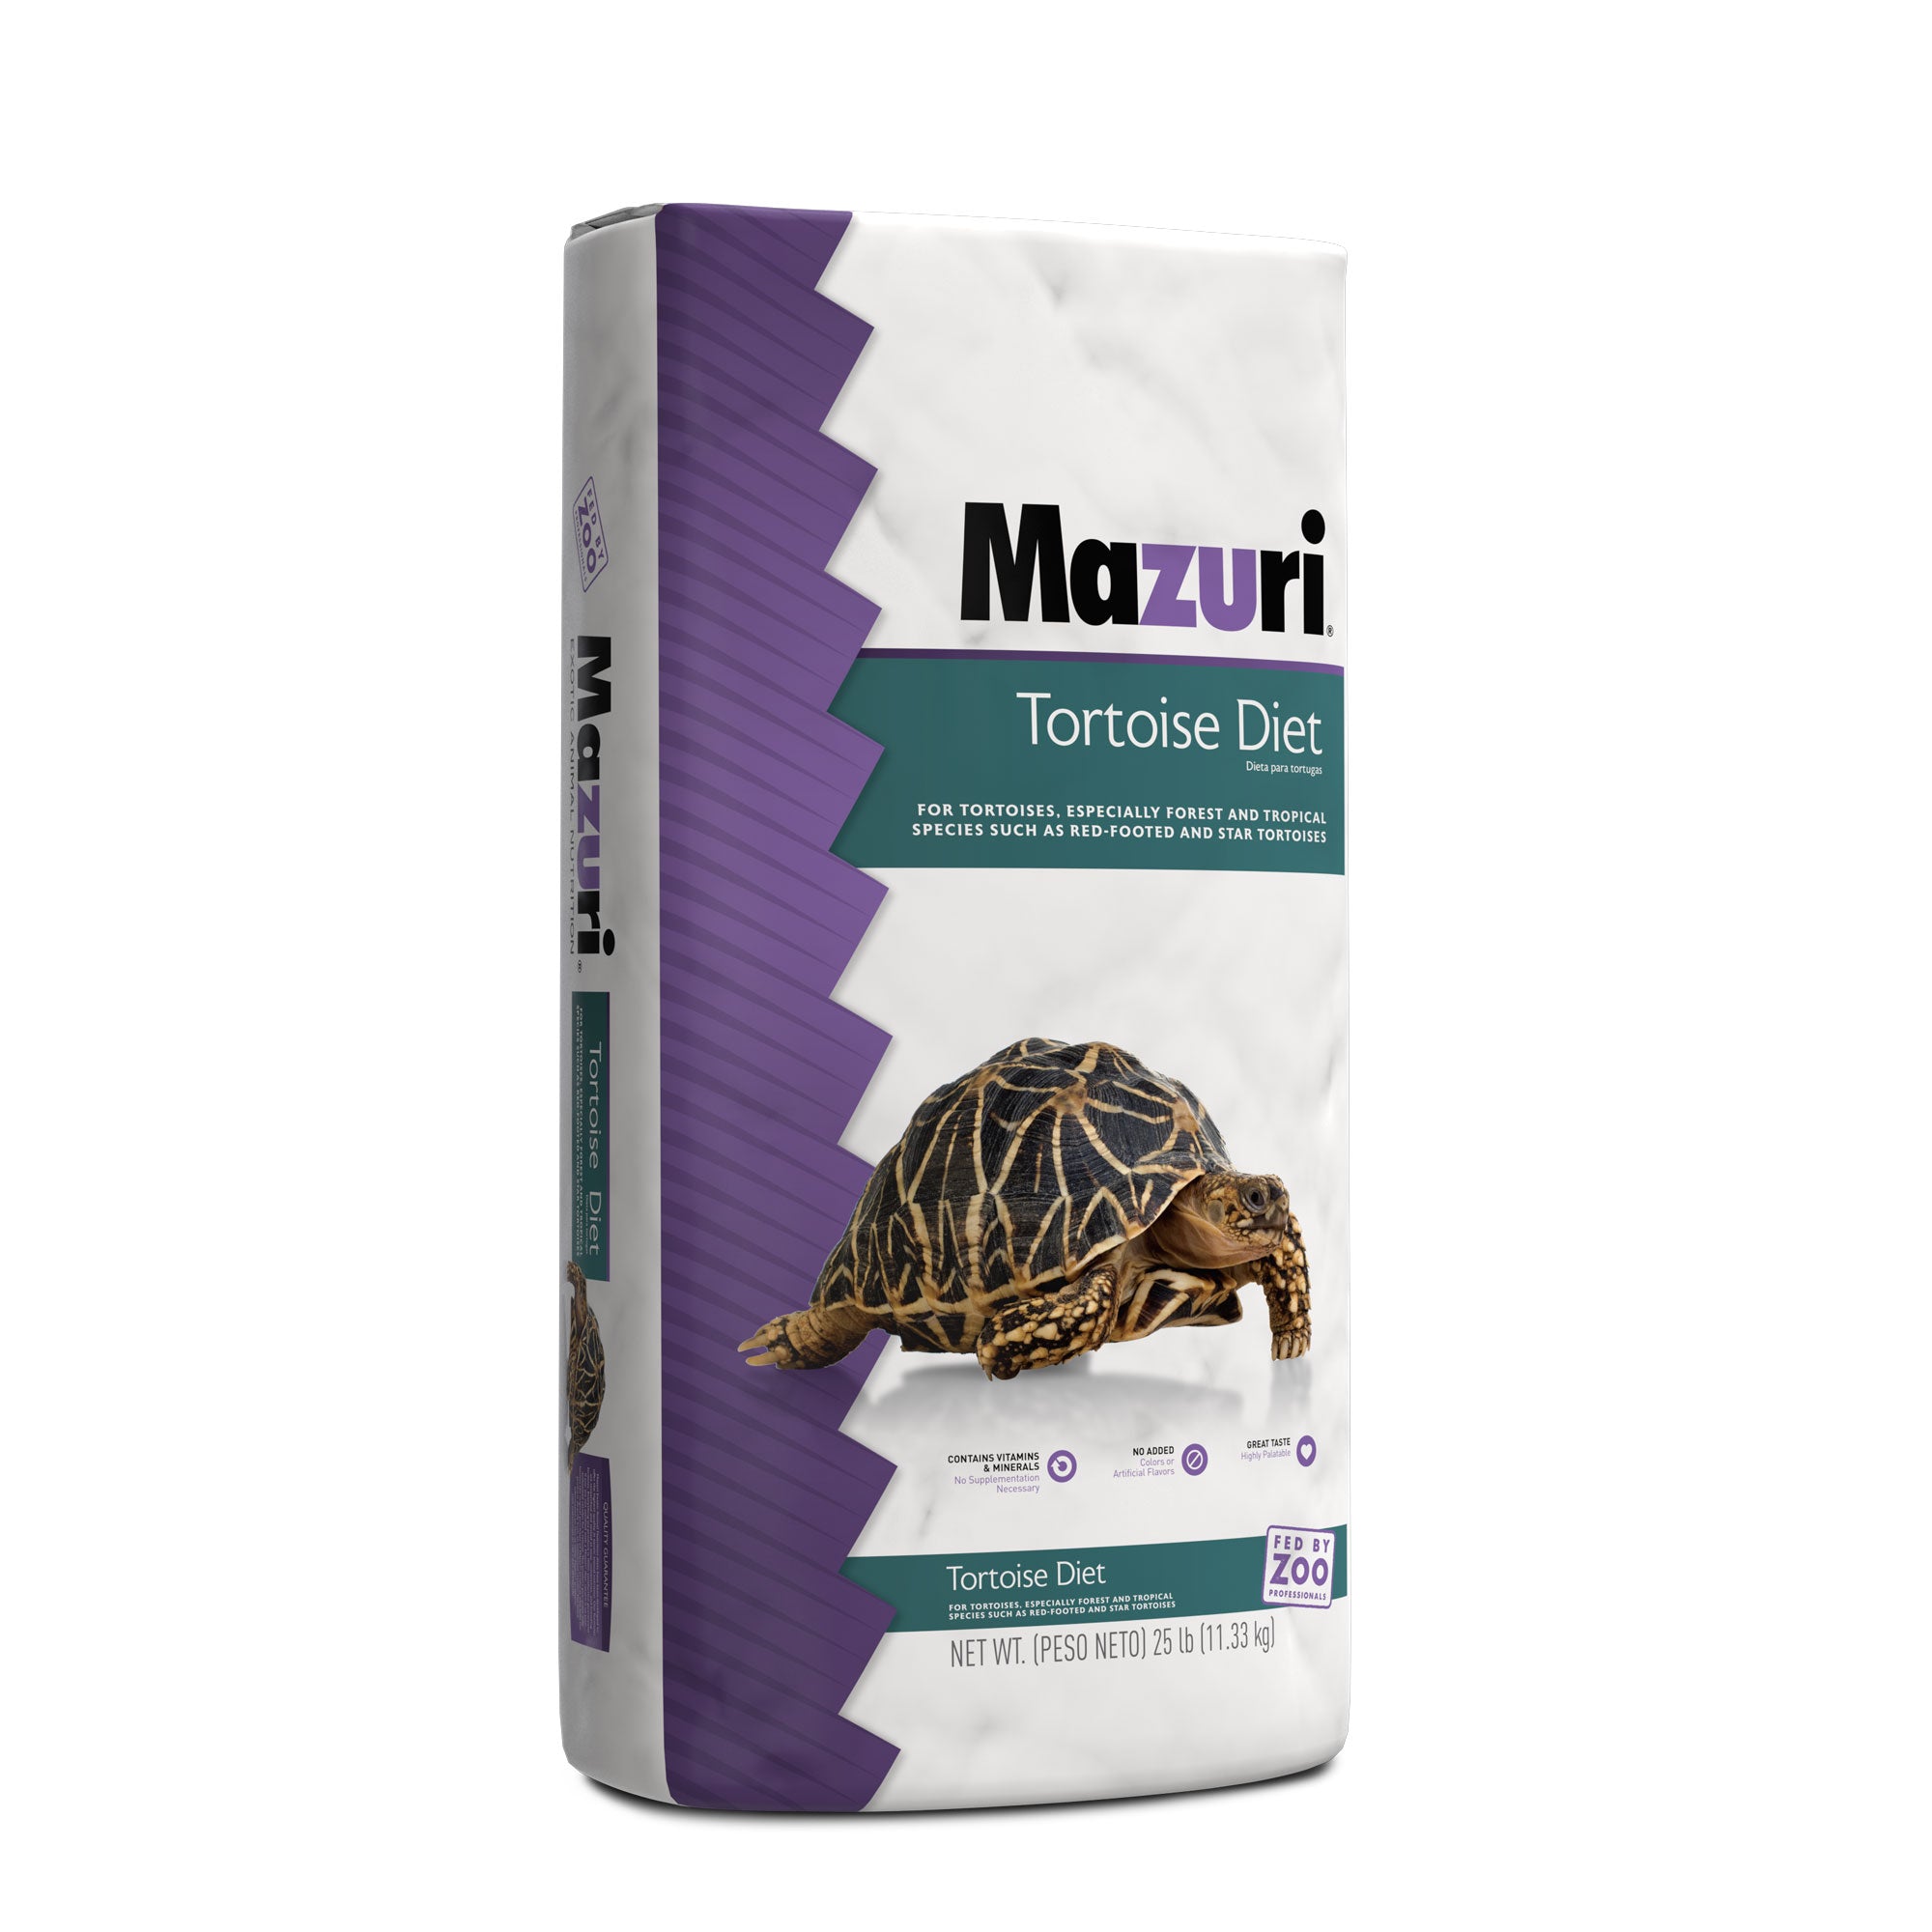 Mazuri Tortoise Diet large bag with tortoise image showing left gusset